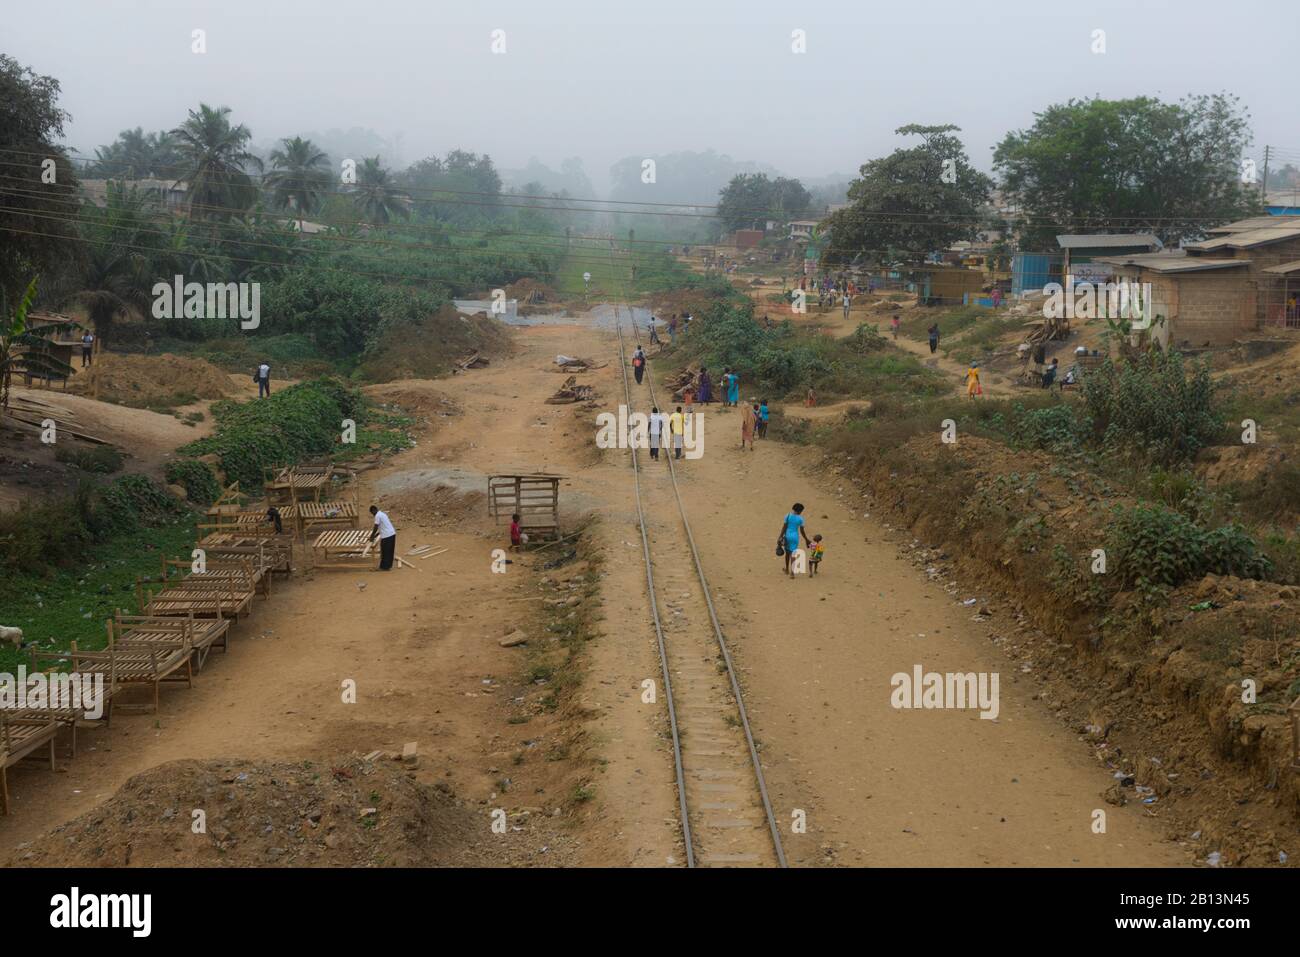 Railway tracks through a village in Southern Ghana Stock Photo